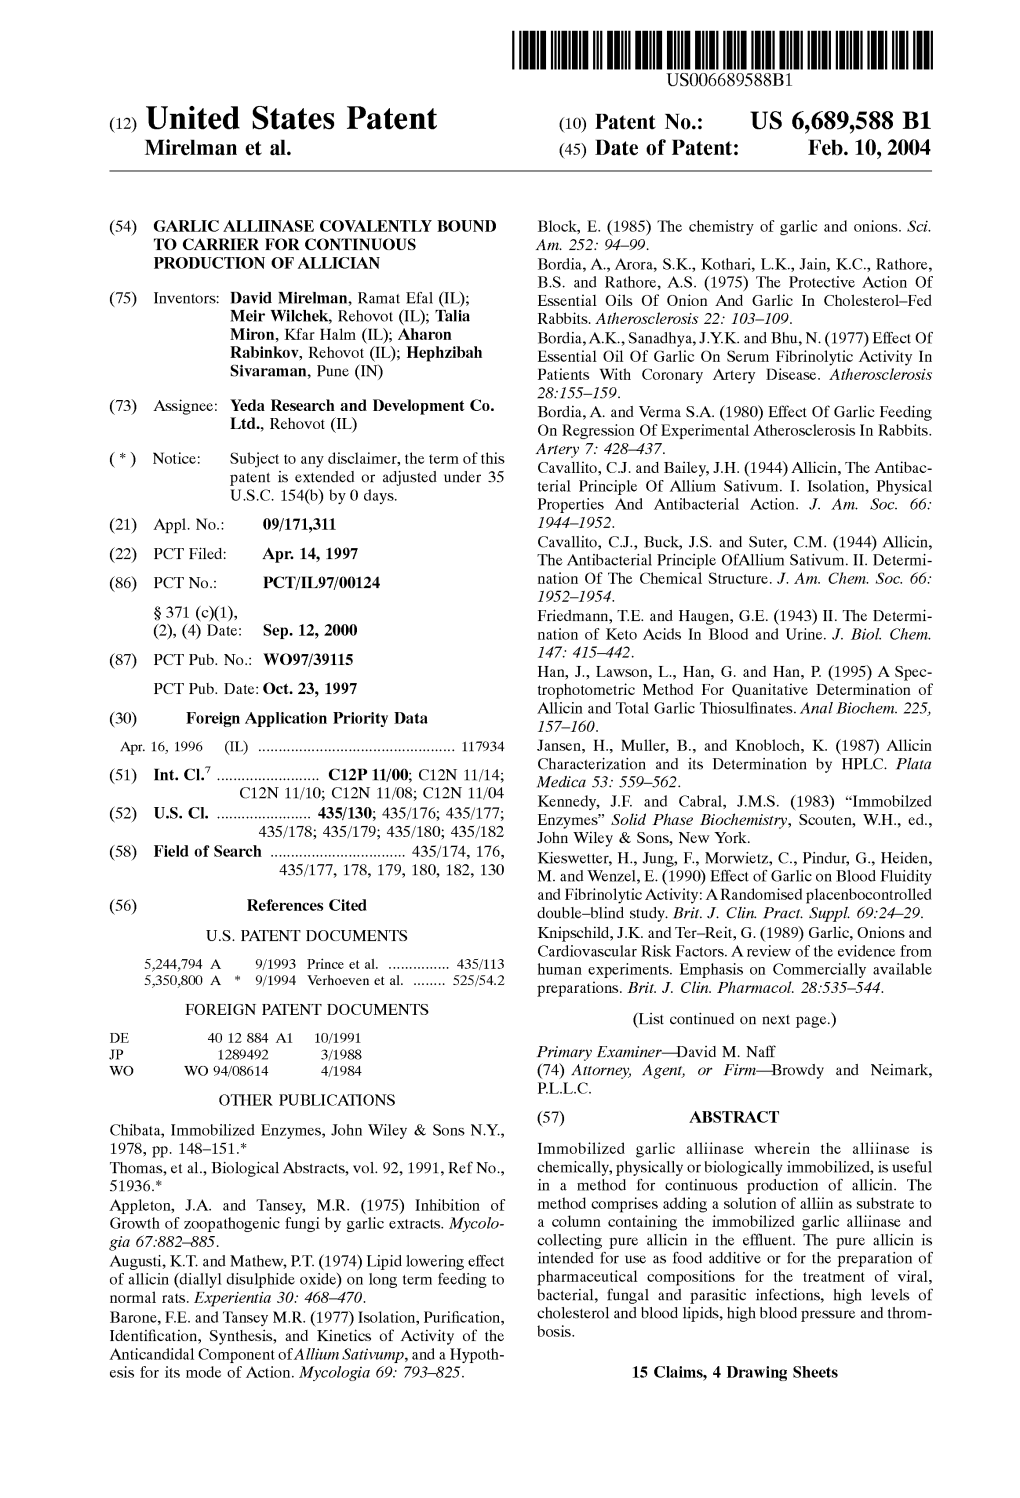 (12) United States Patent (10) Patent No.: US 6,689,588 B1 Mirelman Et Al